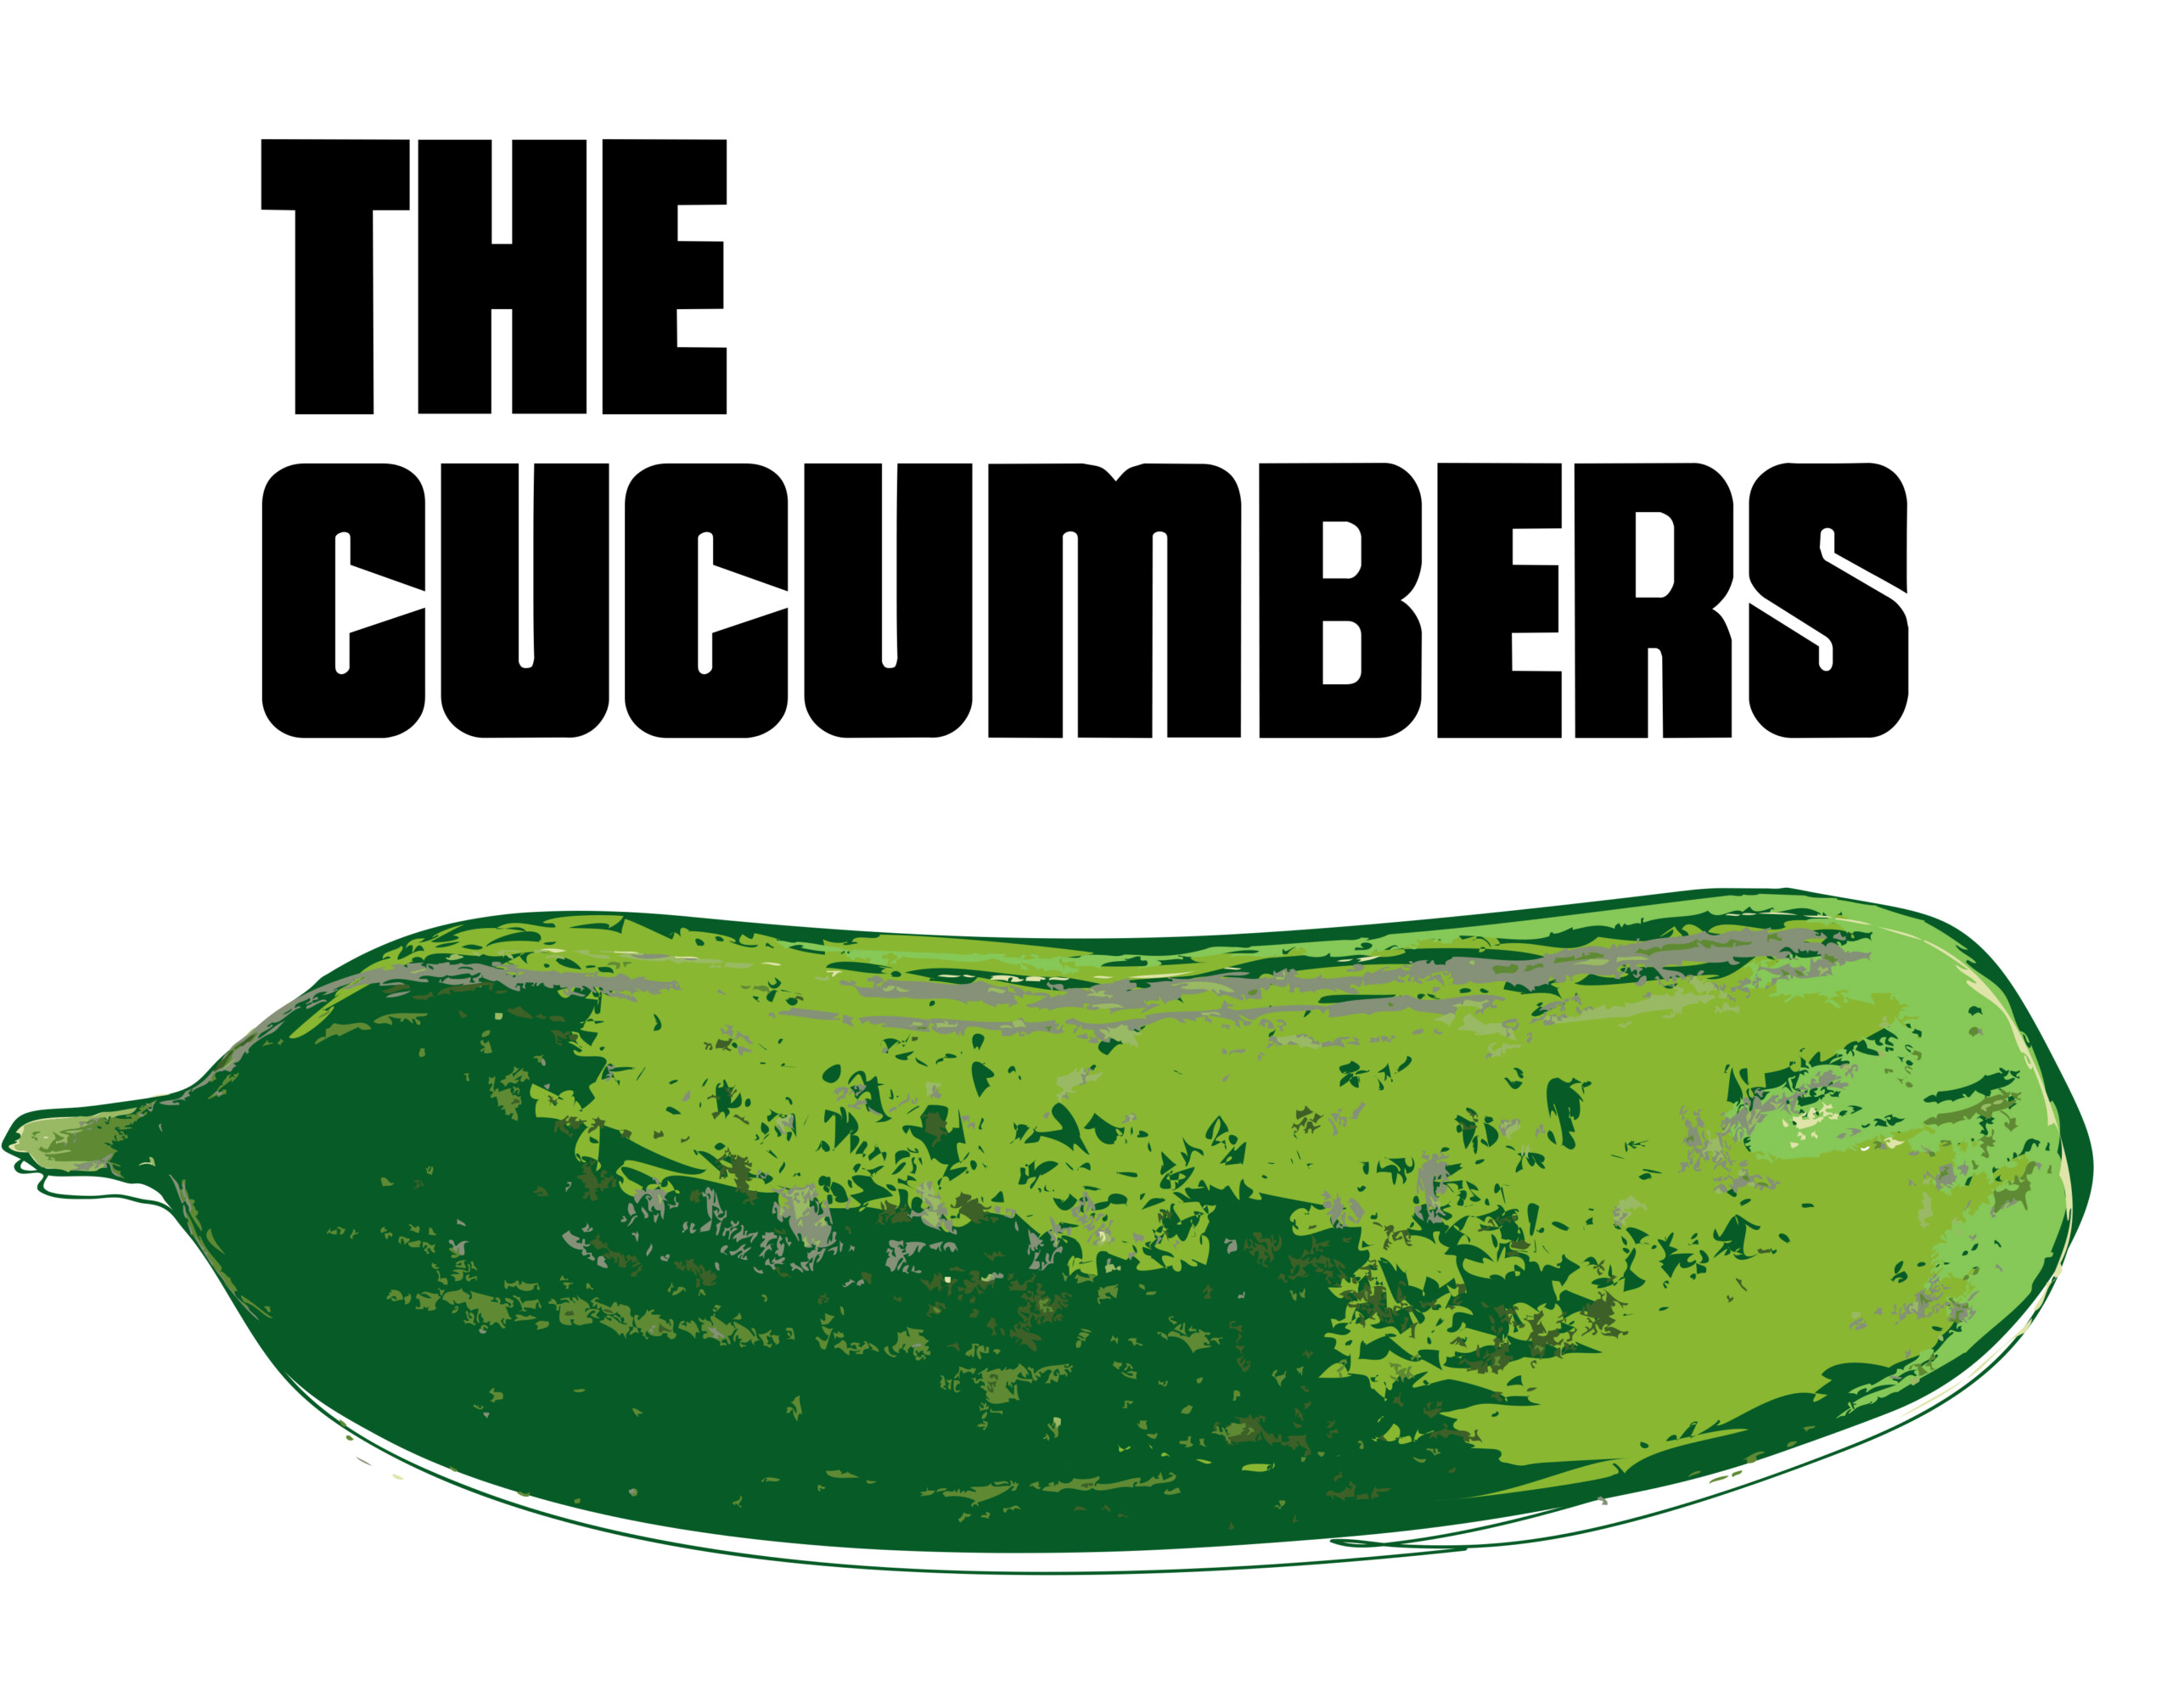 The Cucumbers